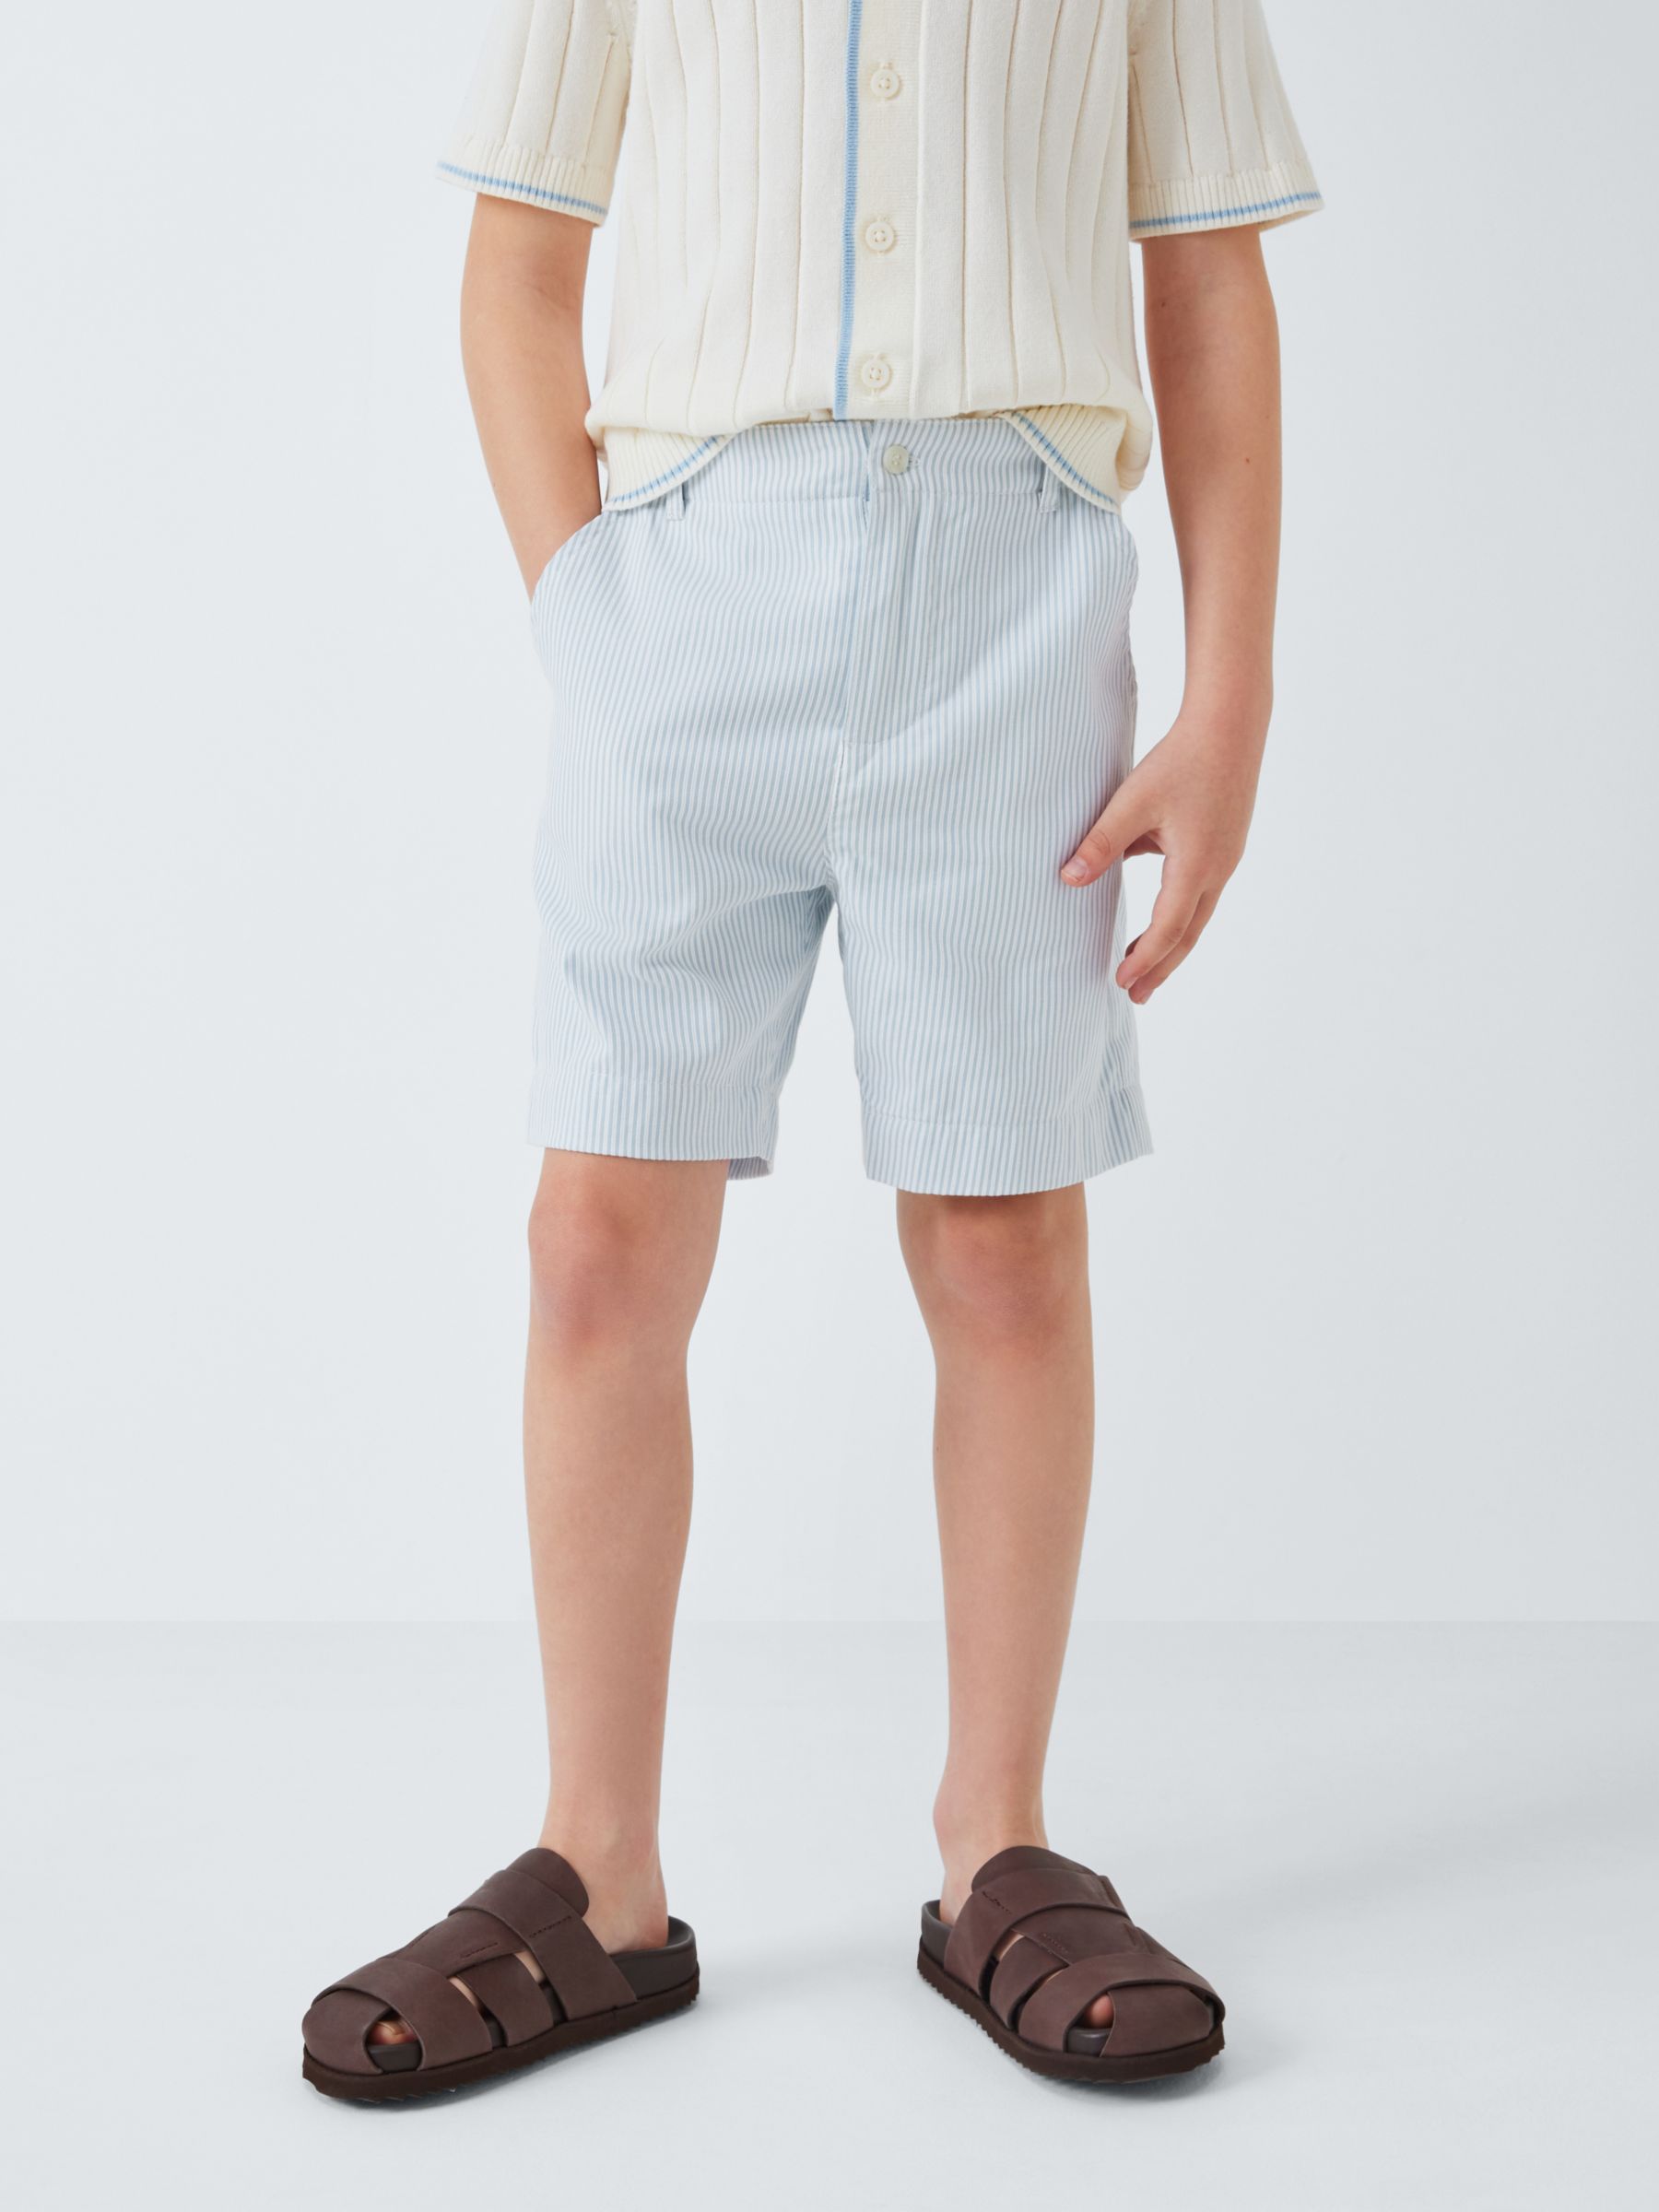 John Lewis Heirloom Collection Kids' Ticking Stripe Shorts, Blue/White, 9 years